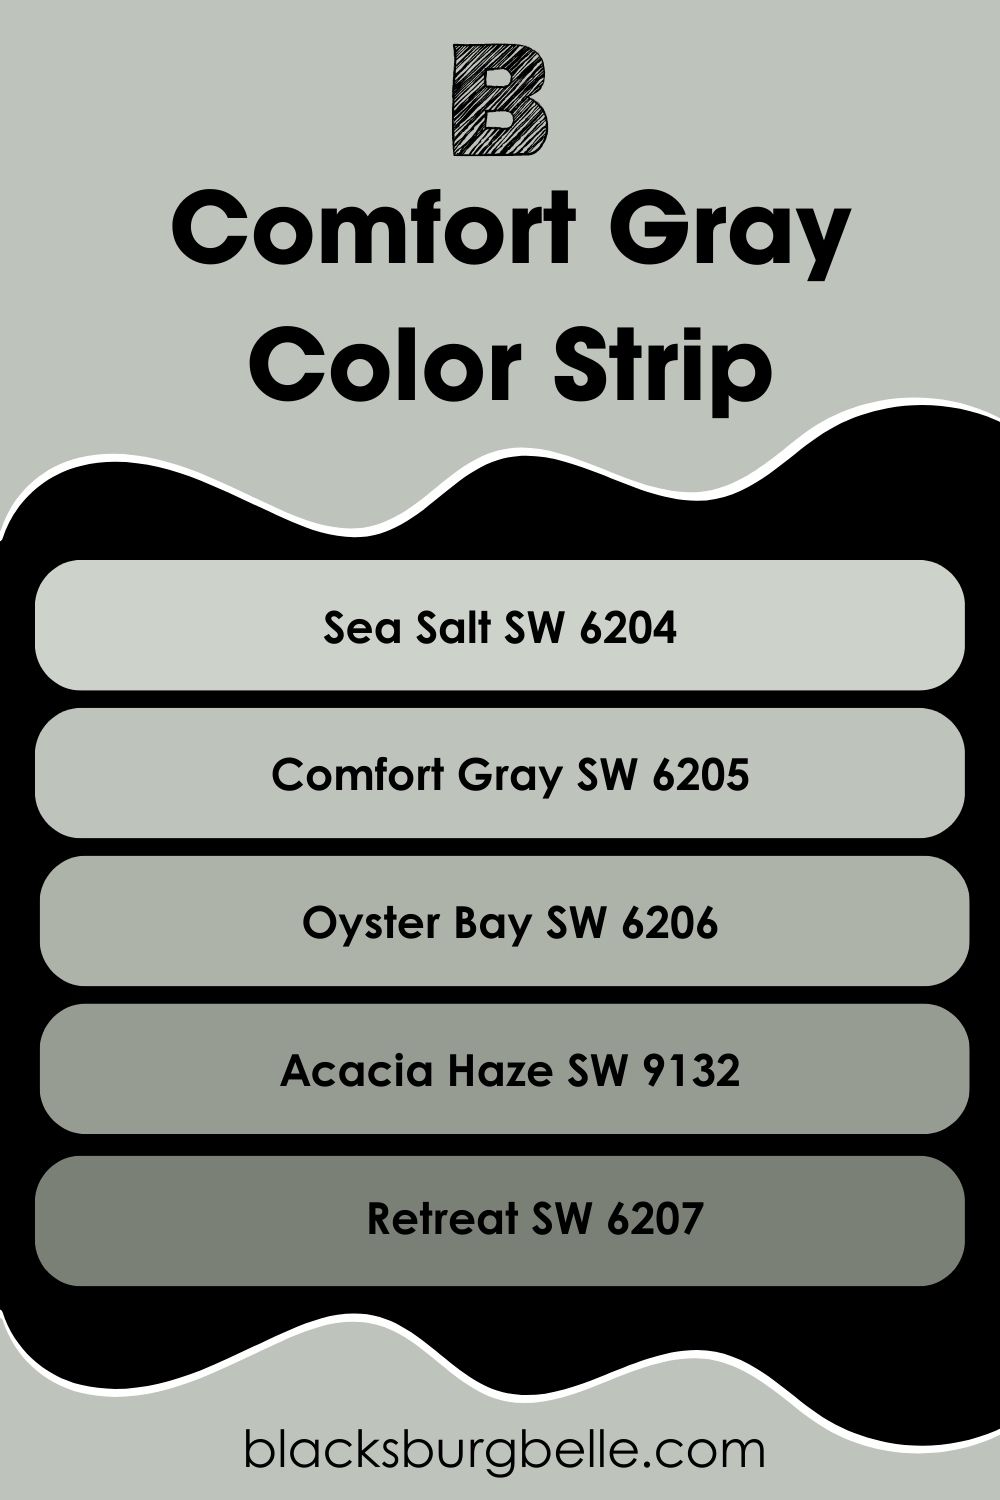 Sherwin-Williams Comfort Gray Color Strip